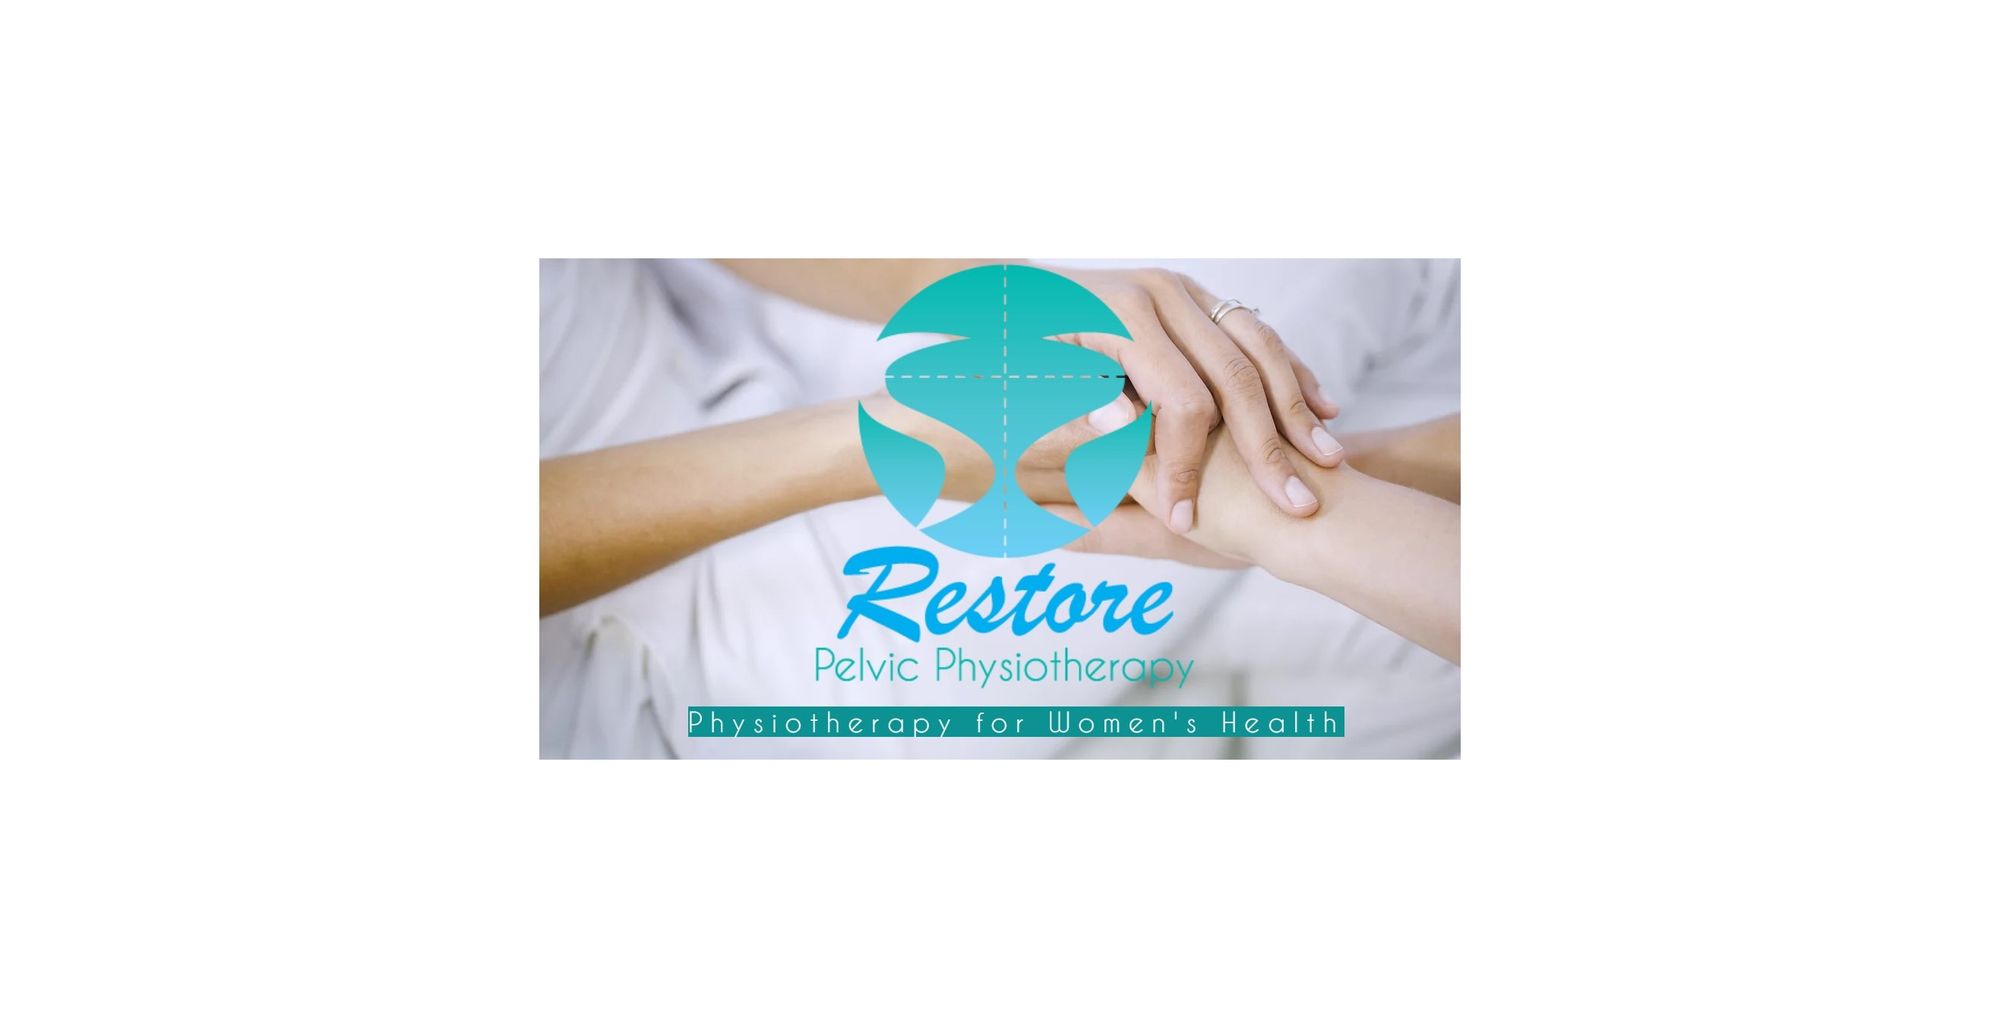 Restore Pelvic Physiotherapy - Andrea Baker